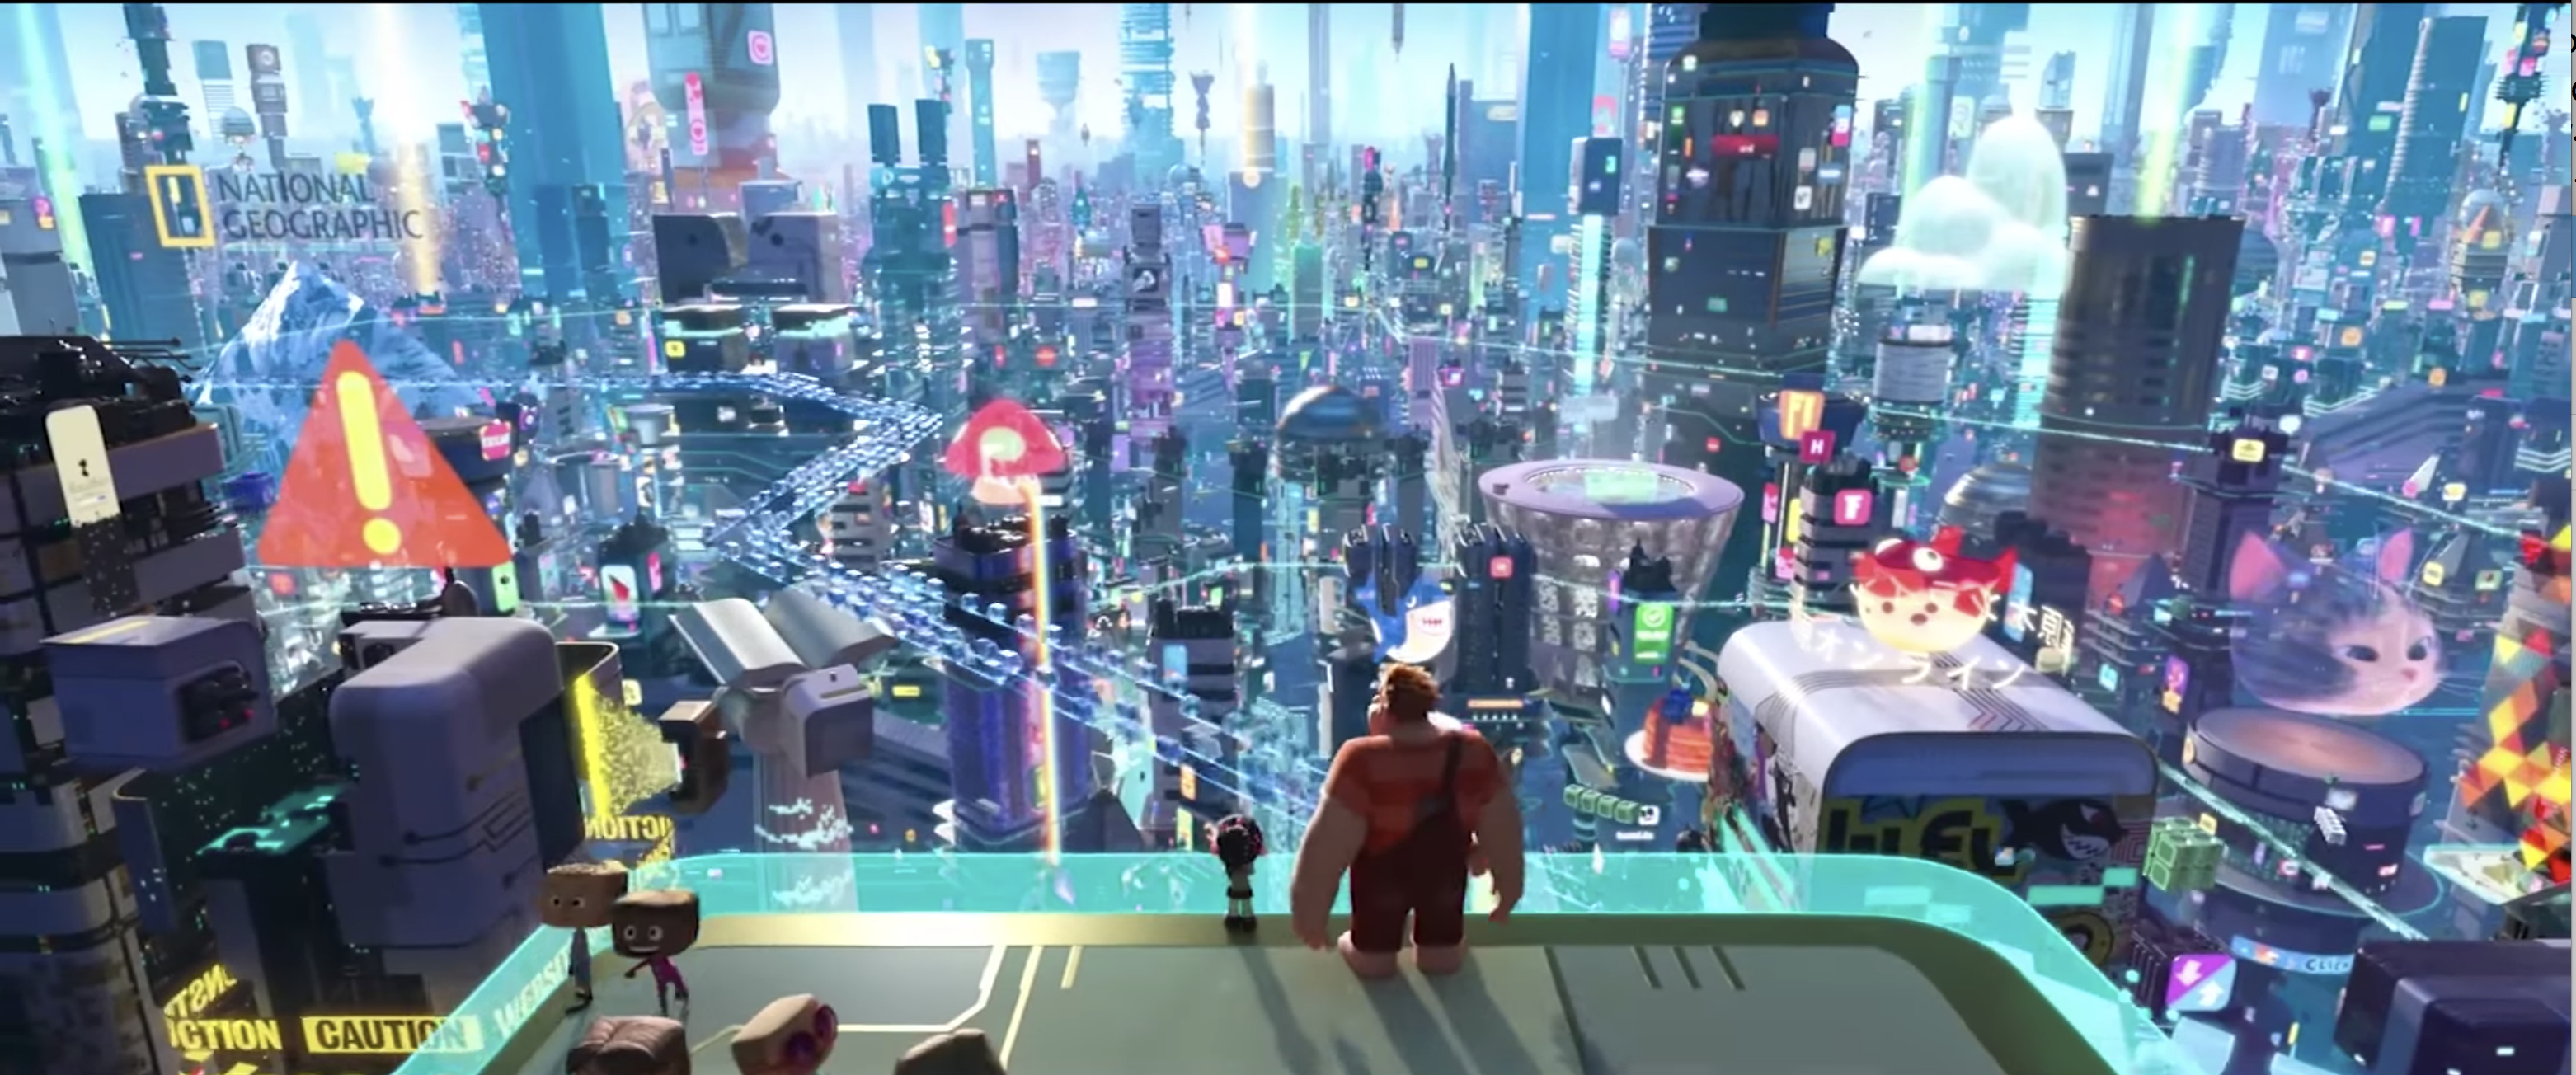 Ralph overlooks a 3D-animated city